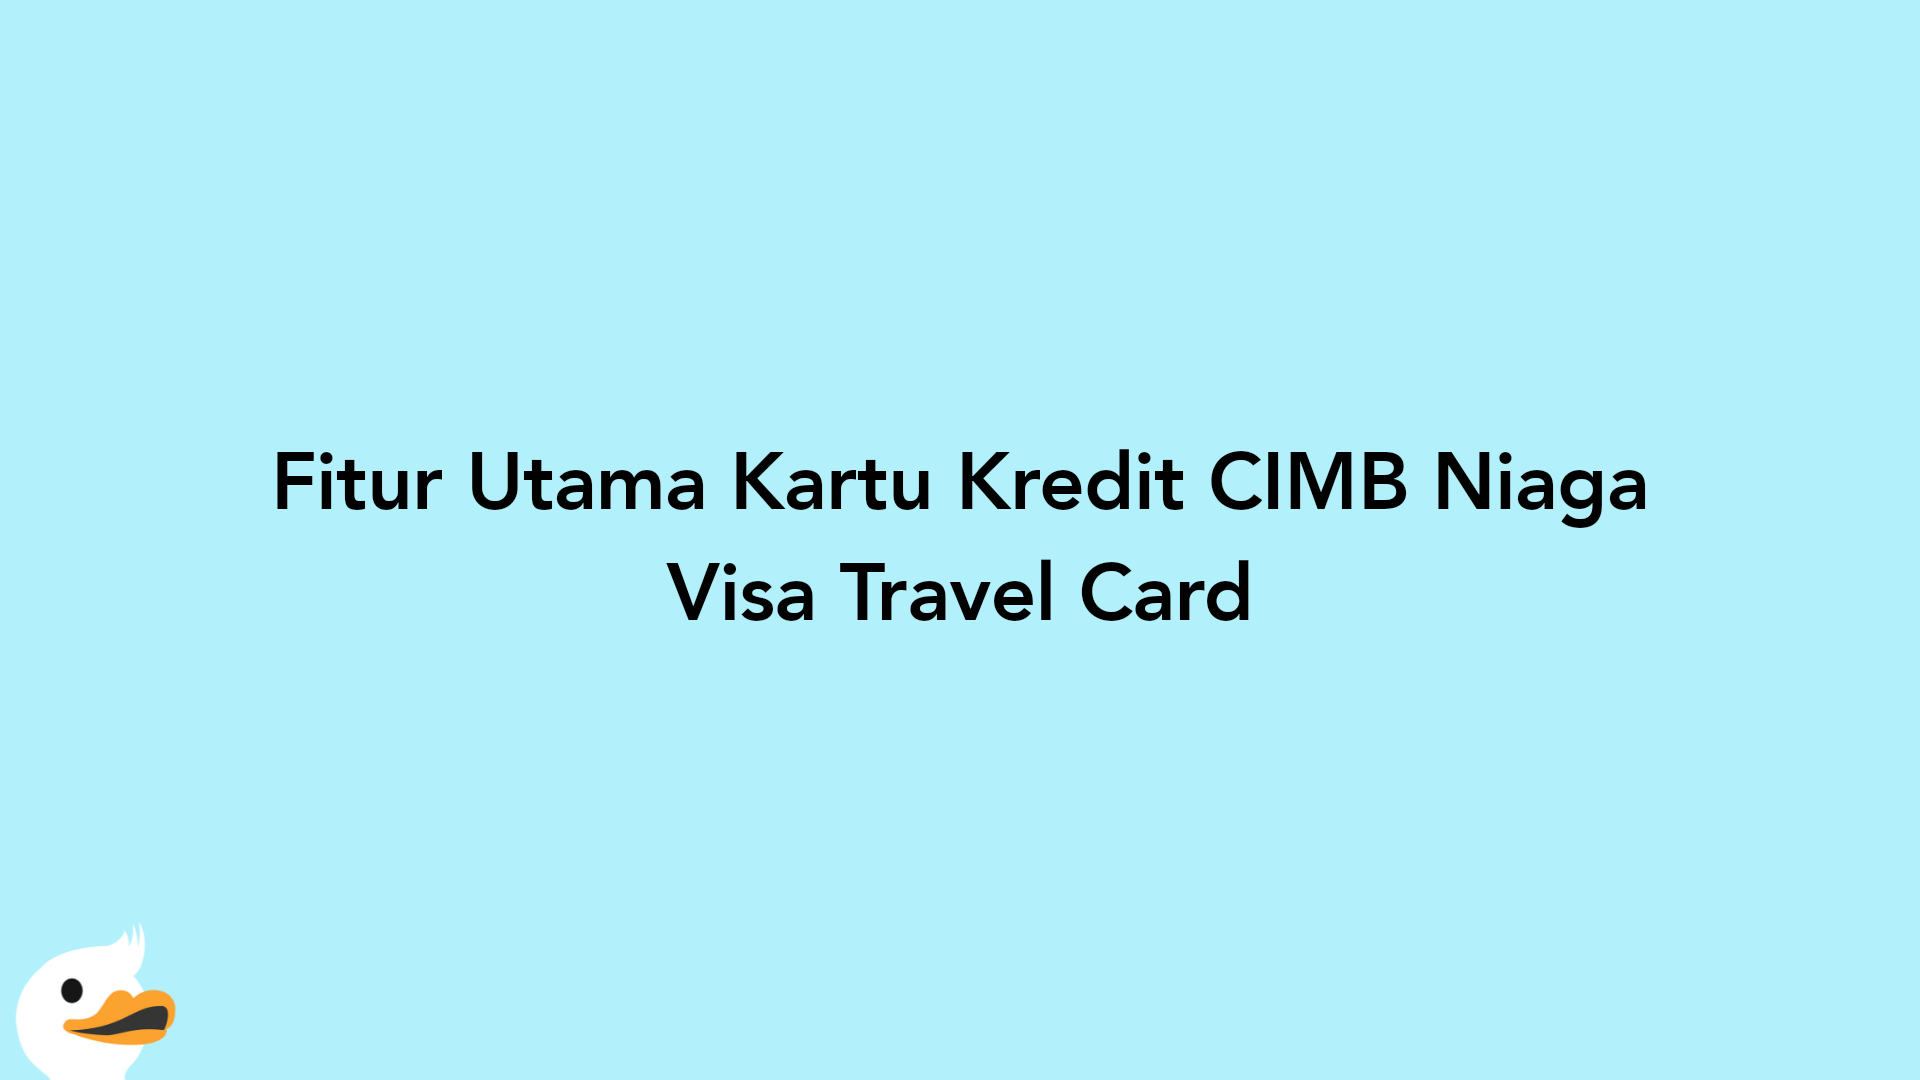 Fitur Utama Kartu Kredit CIMB Niaga Visa Travel Card